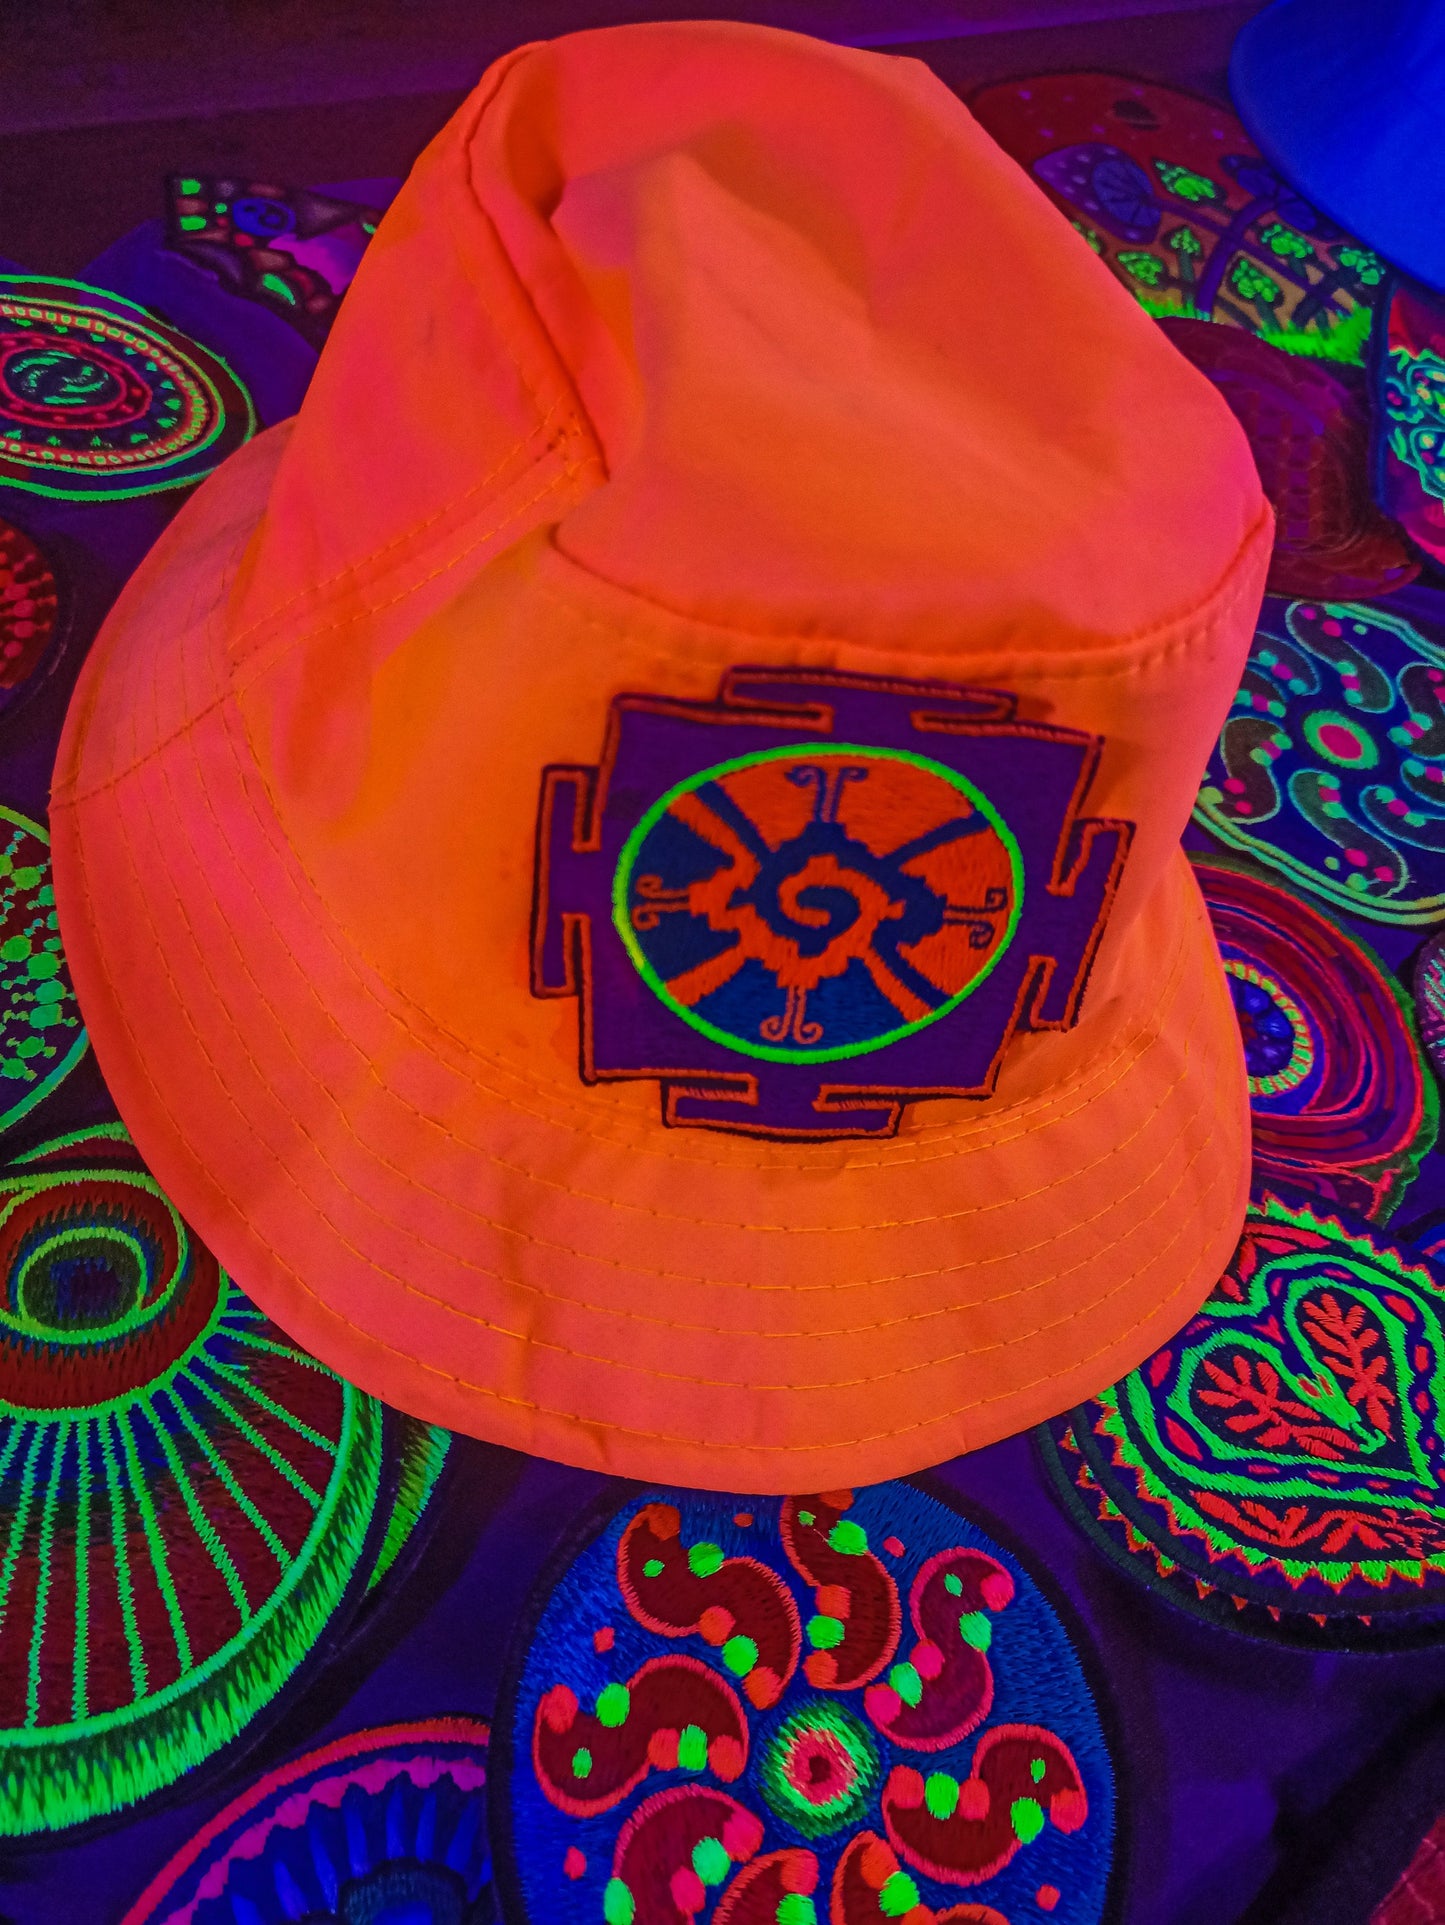 Hunab Ku UV Orange Fisher Hat blacklight glowing with embroidery patch sacred center of galaxy the one god Unity of Dualism Maya Calendar